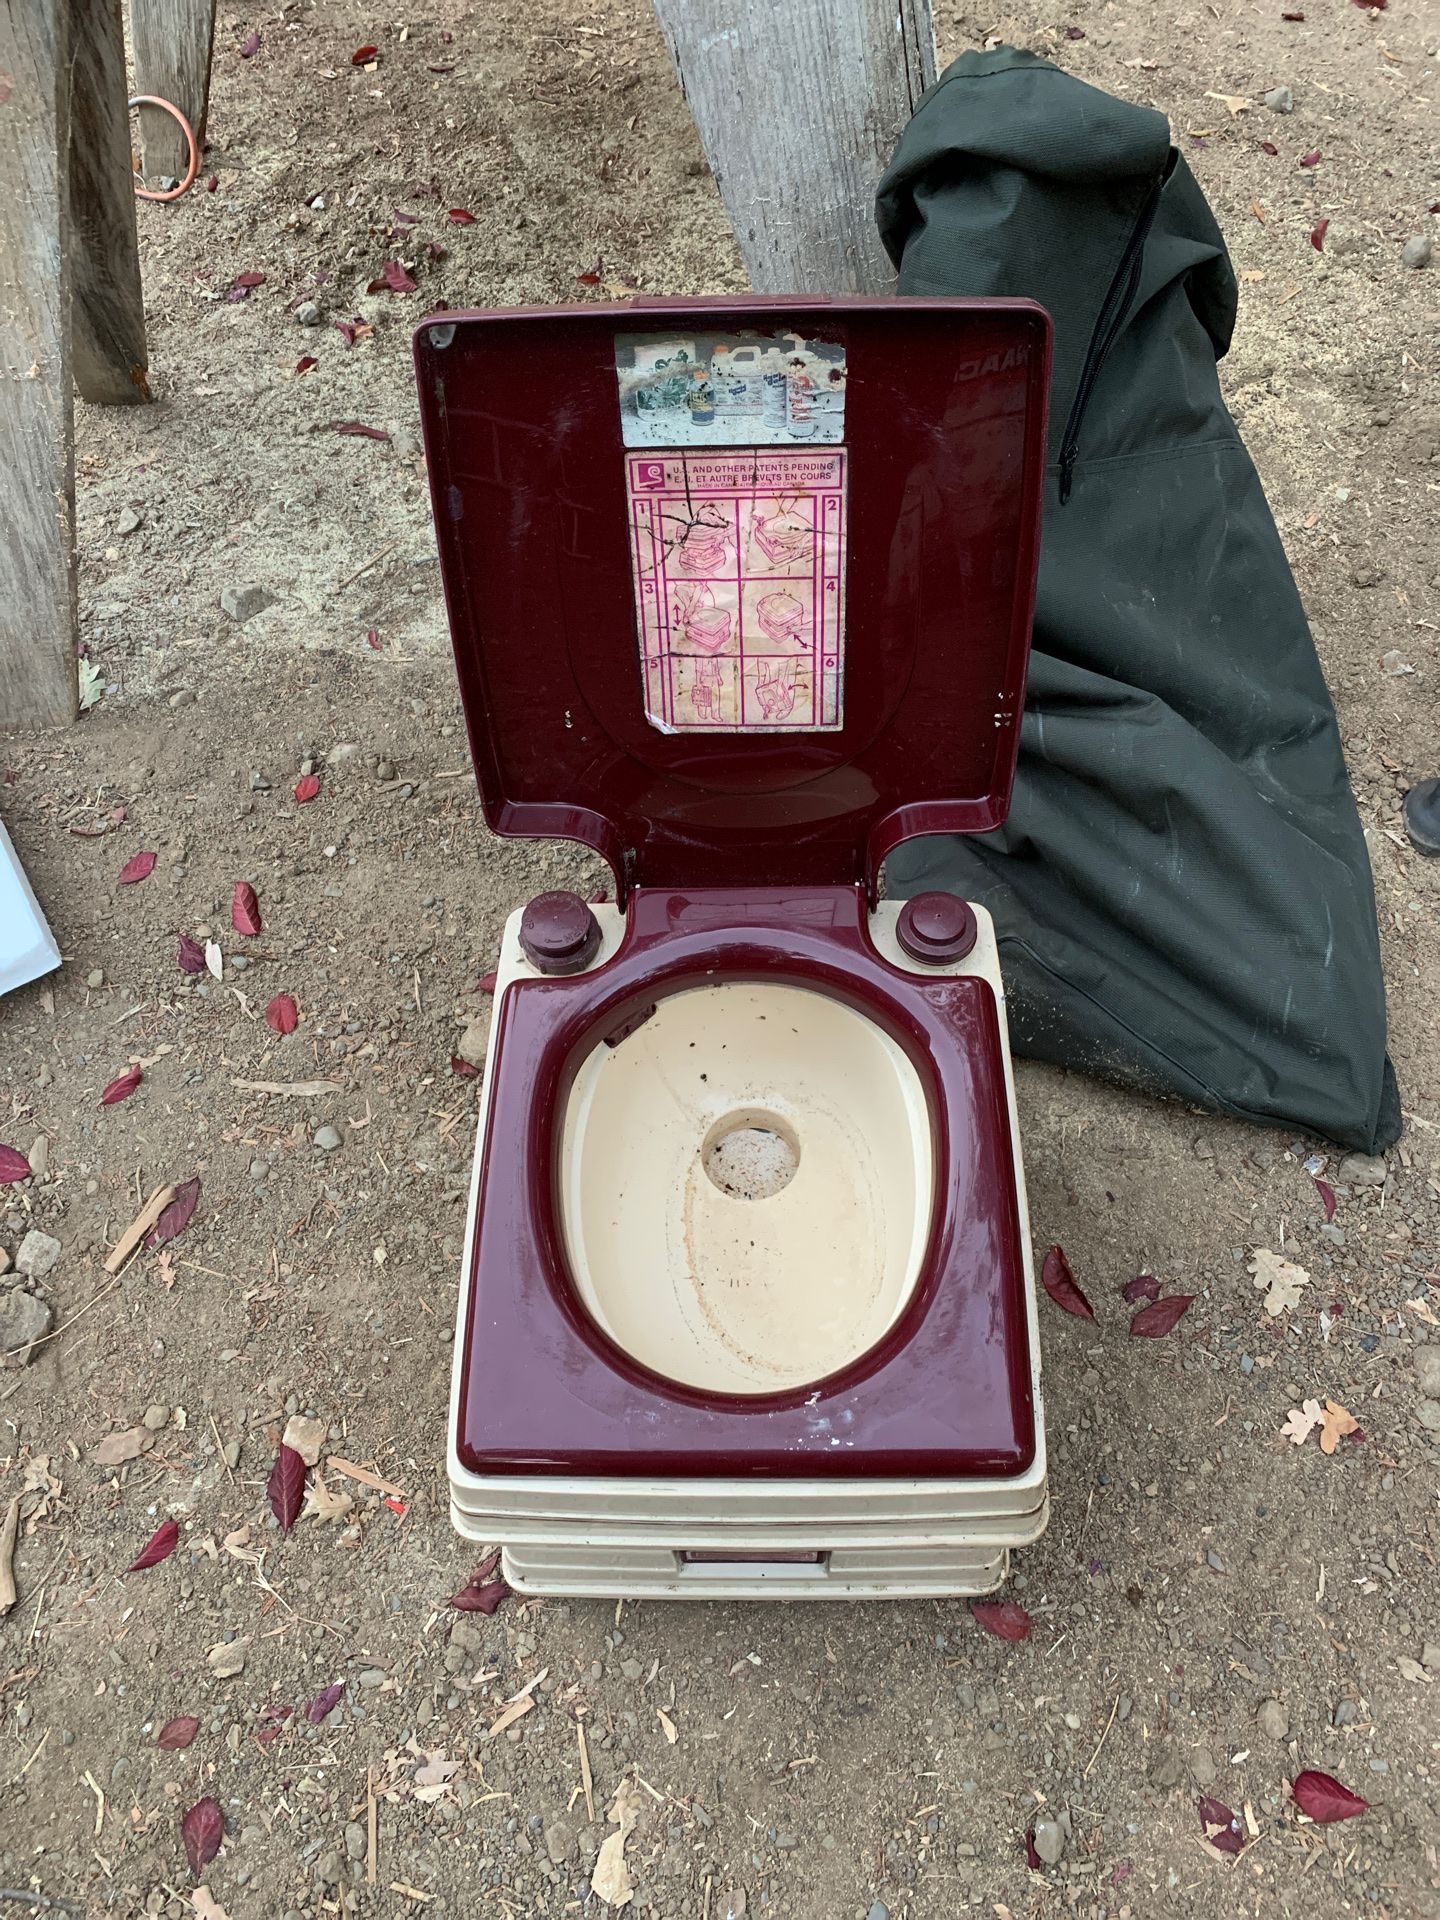 Portable toilet camping toilet